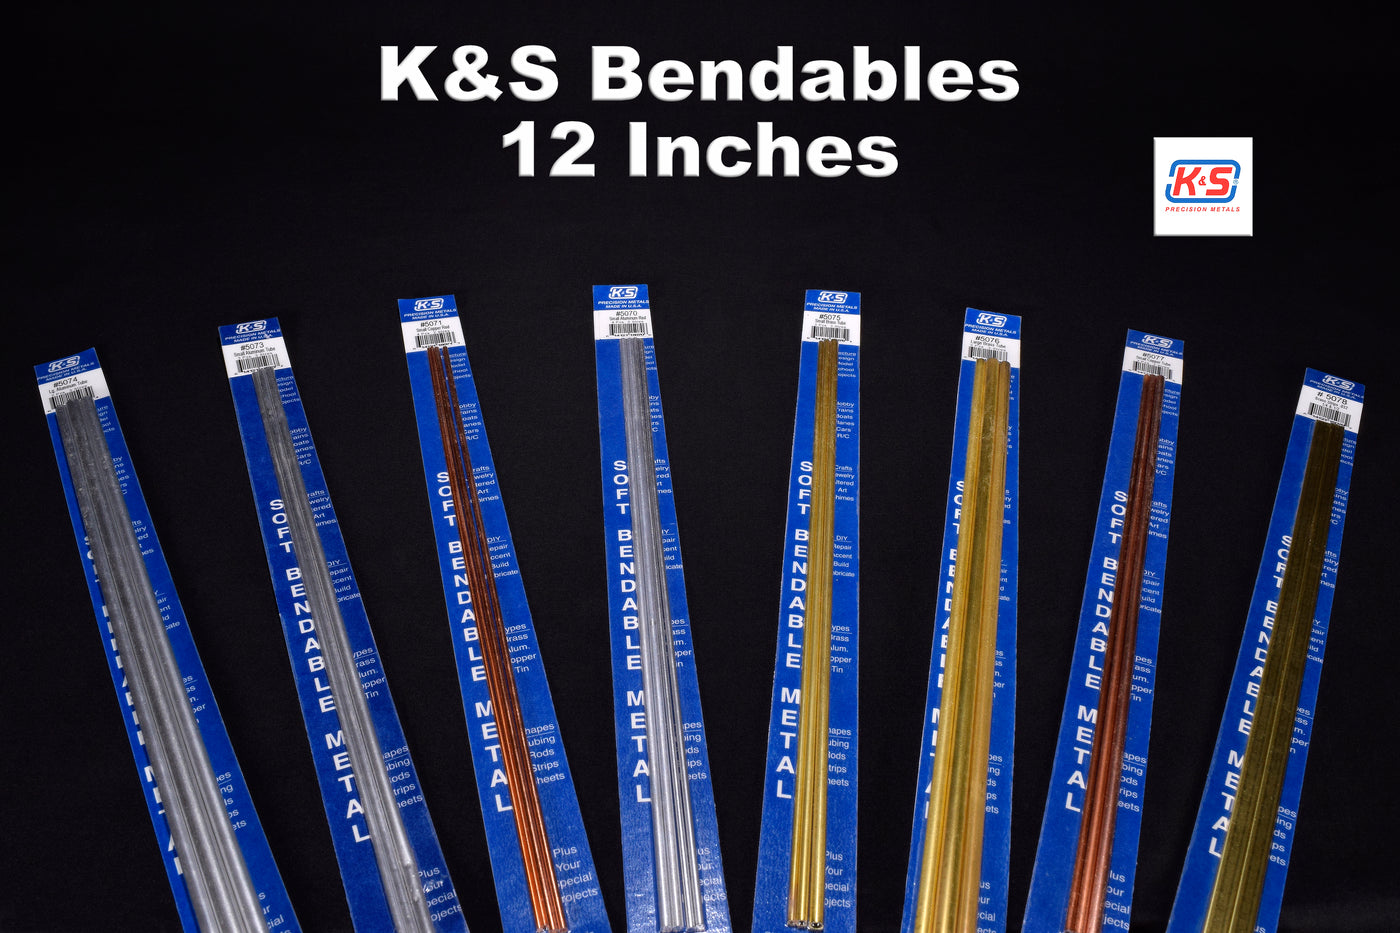 K&S Bendable Copper Rod 1/16 and 3/32 2pcs. Each